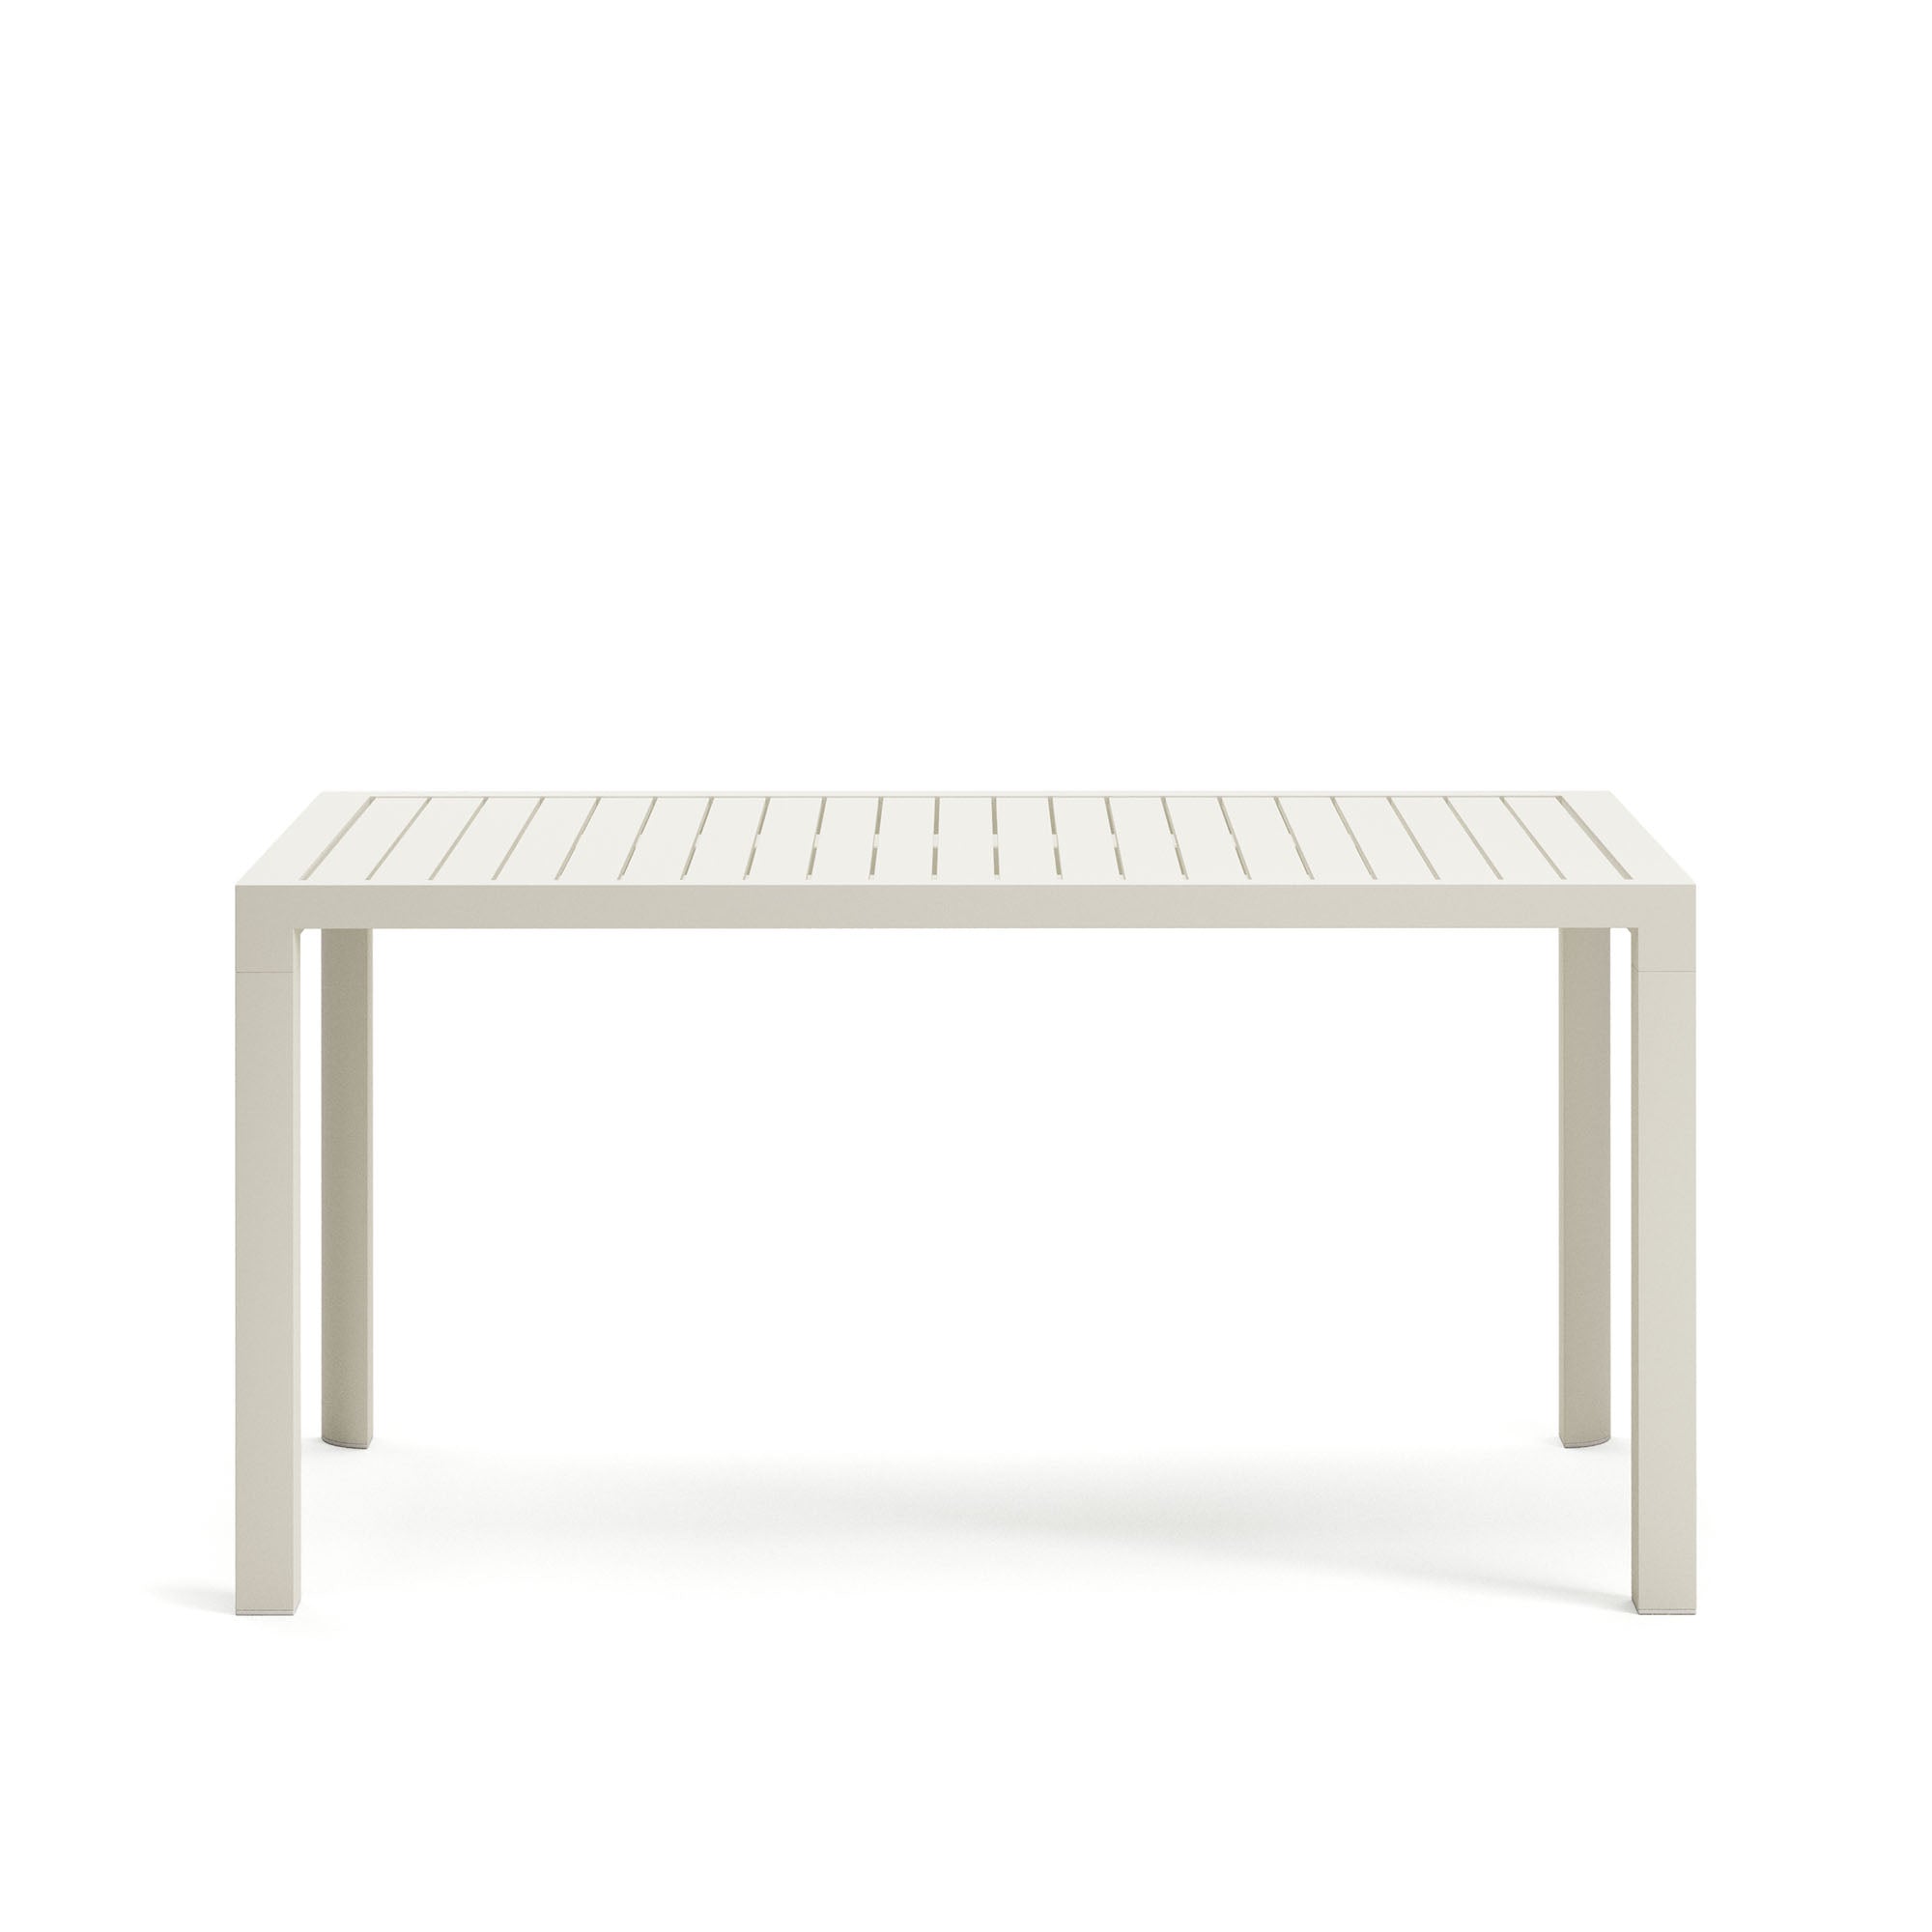 Culip aluminium outdoor table in powder coated white finish, 150 x 77 cm